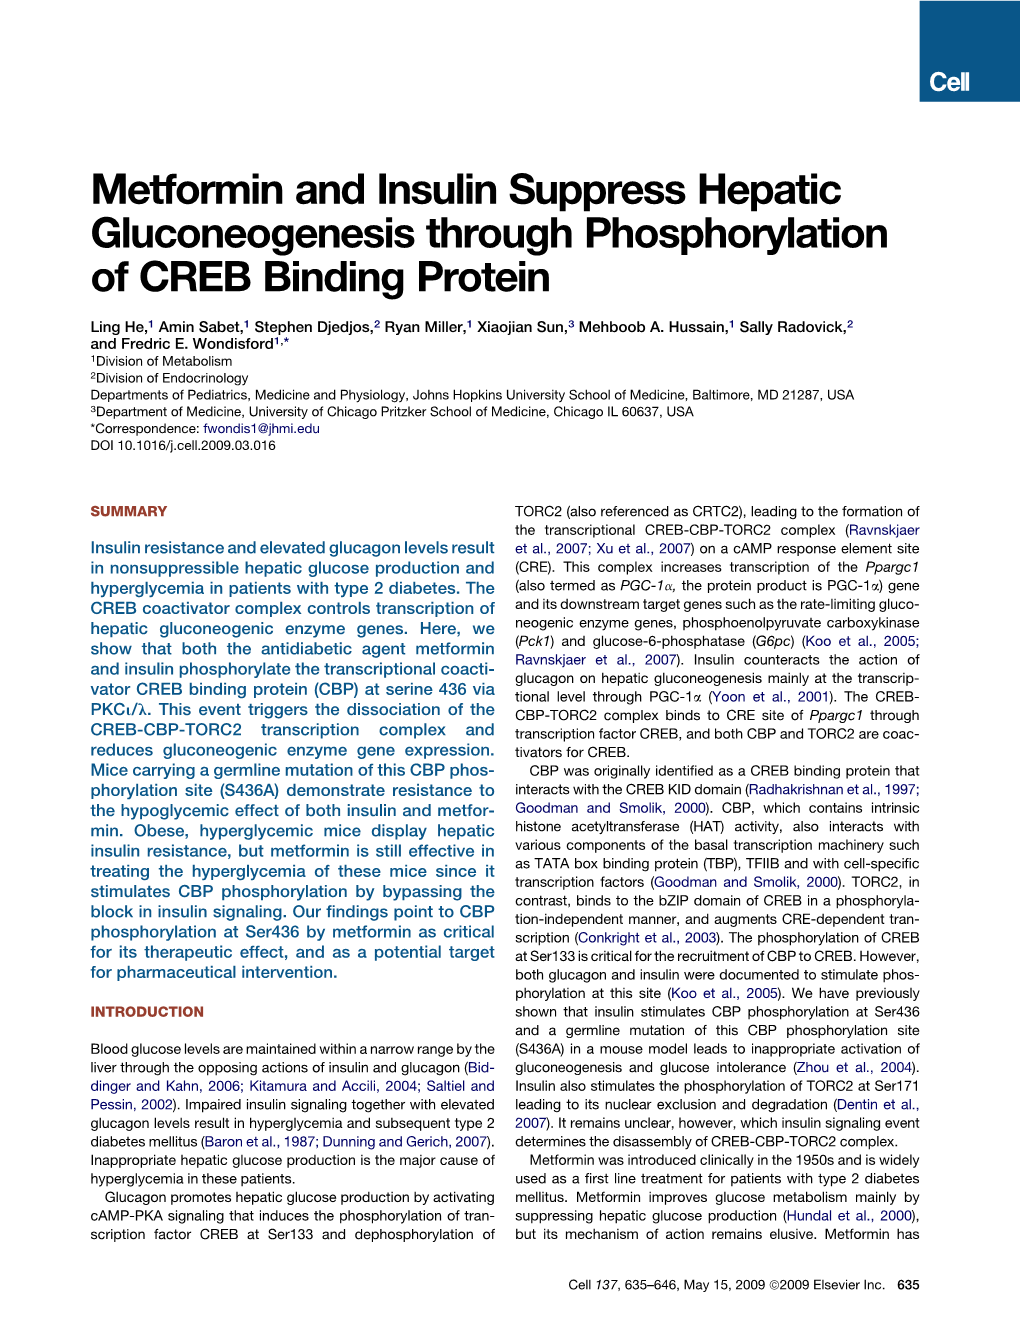 Metformin and Insulin Suppress Hepatic Gluconeogenesis Through Phosphorylation of CREB Binding Protein